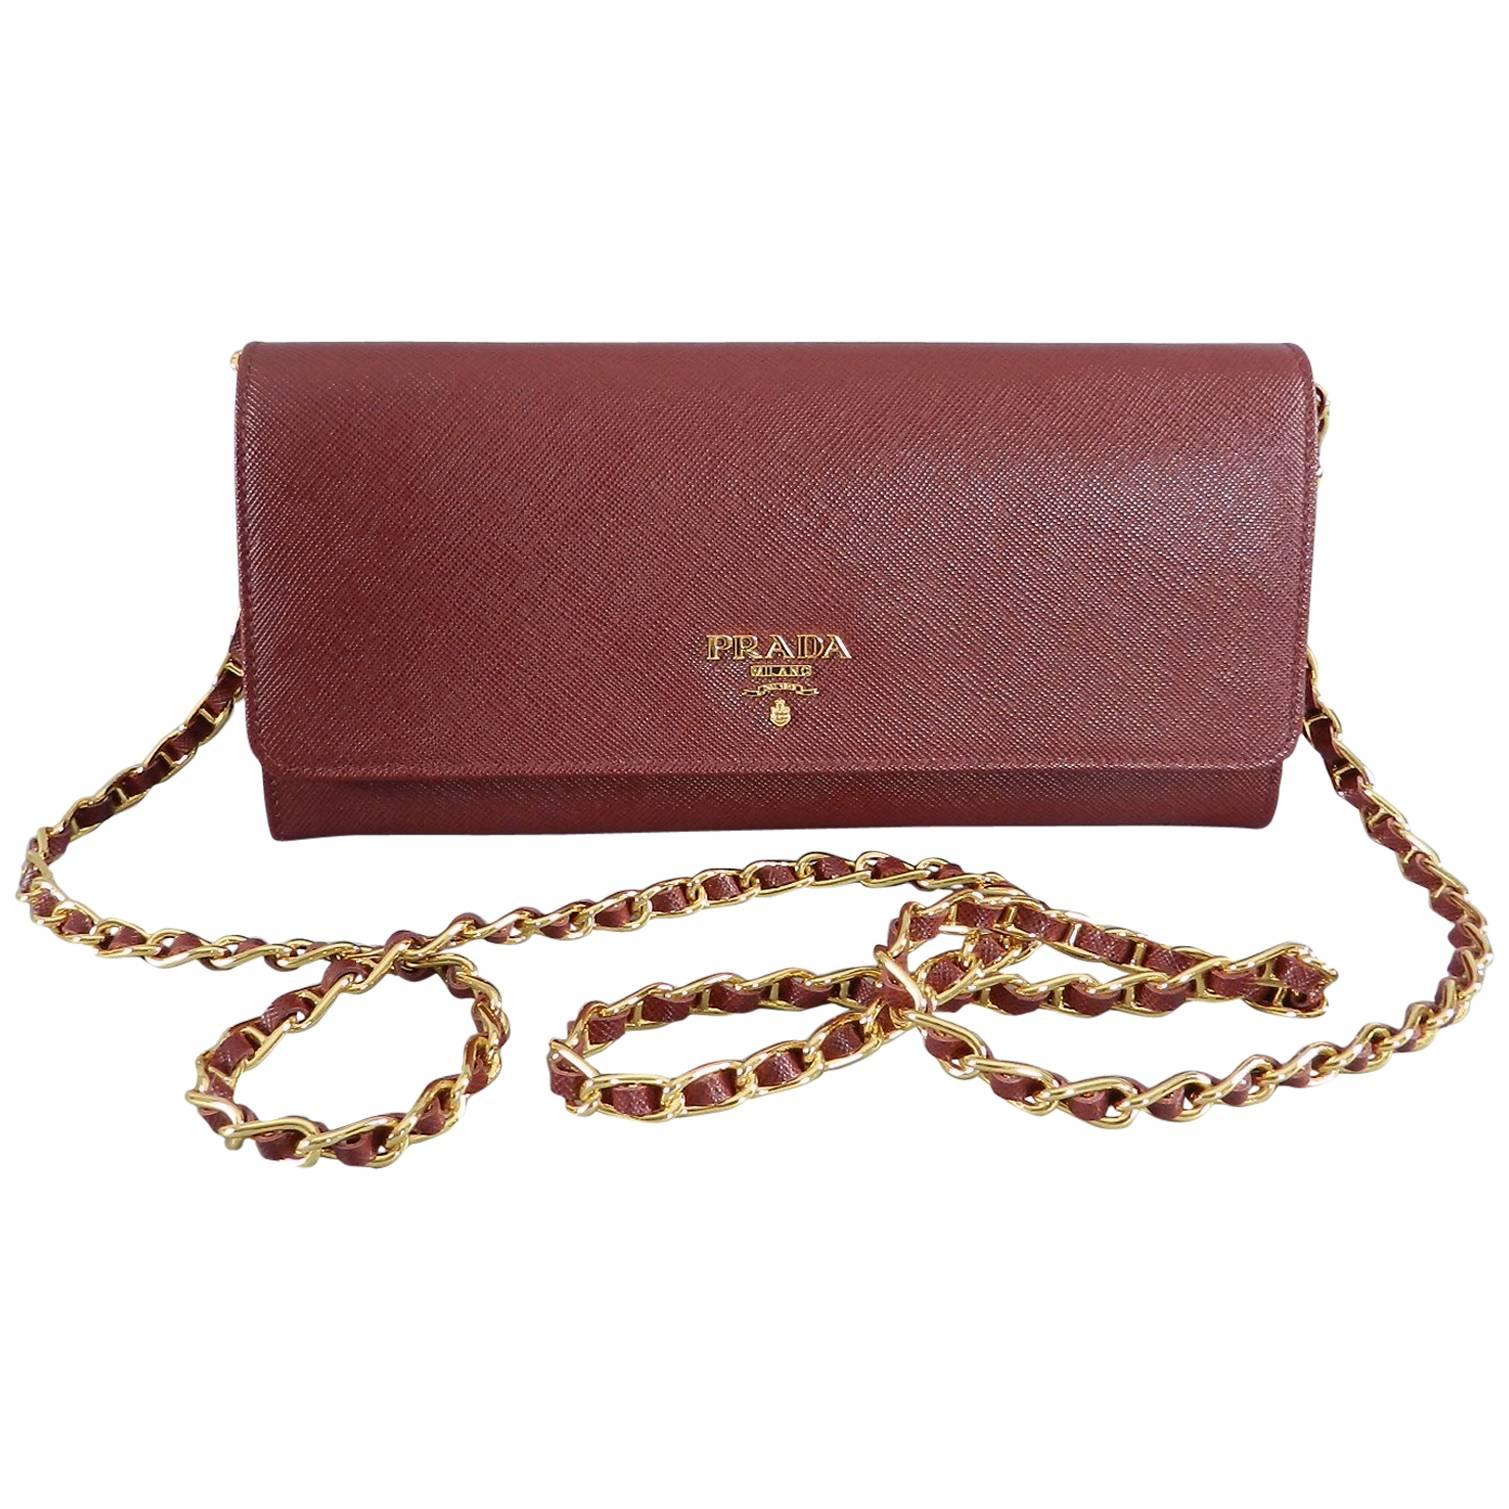 Prada Cerise Saffiano Leather Wallet on a Chain 